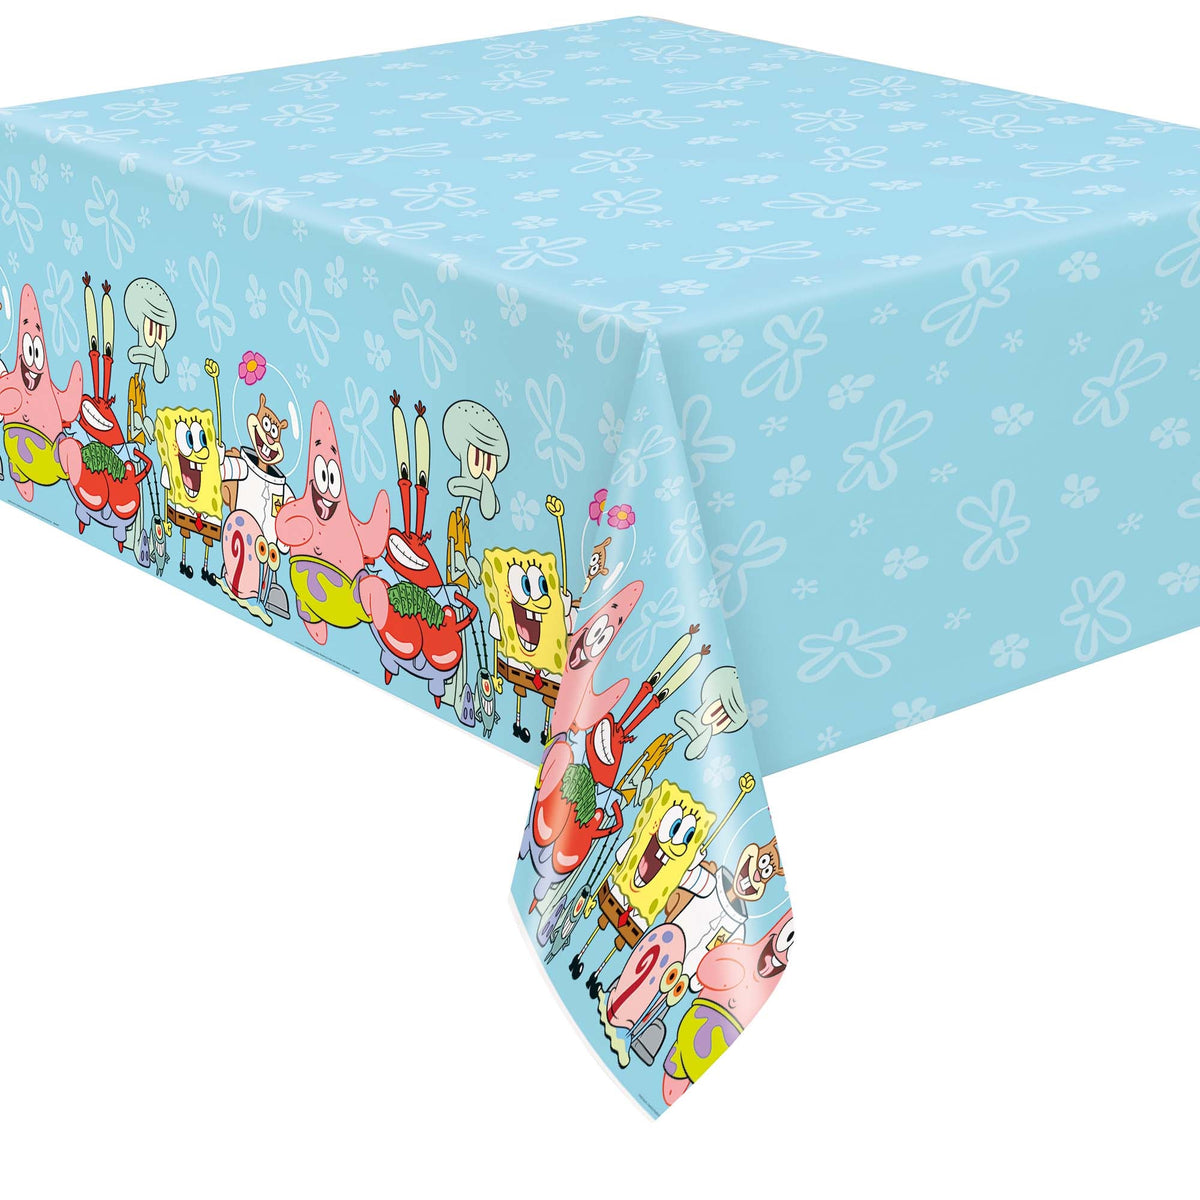 AMSCAN CA Kids Birthday SpongeBob SquarePants Rectangular Plastic Table Cover, 54 x 95 Inches, 1 Count